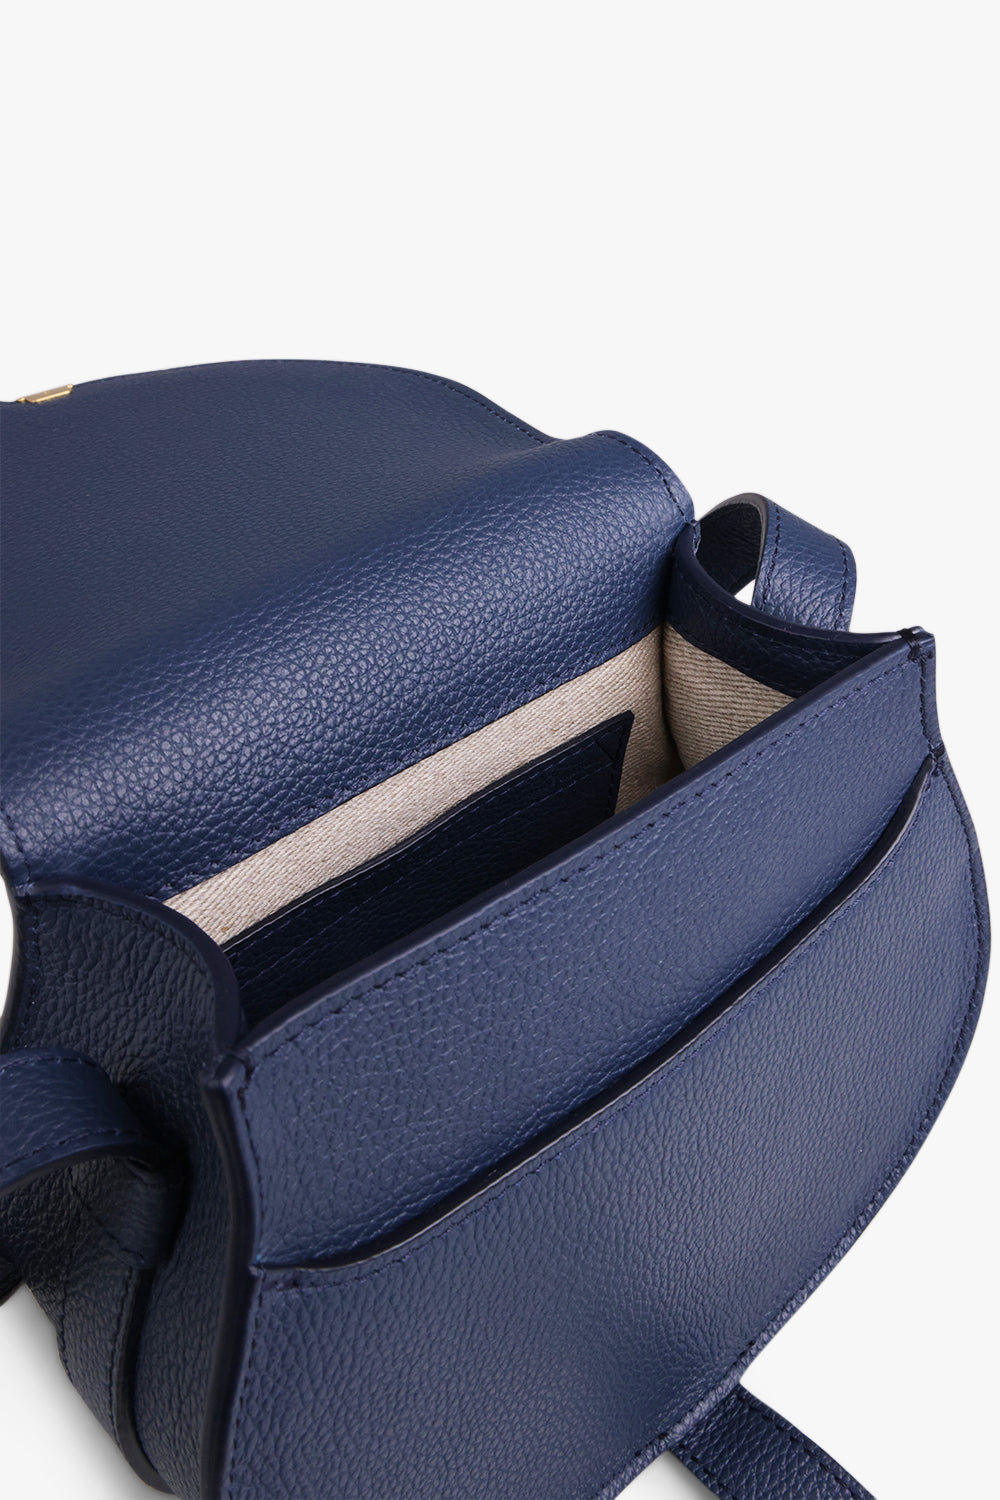 CHLOE BAGS BLUE MARCIE SMALL BAG | NAVY